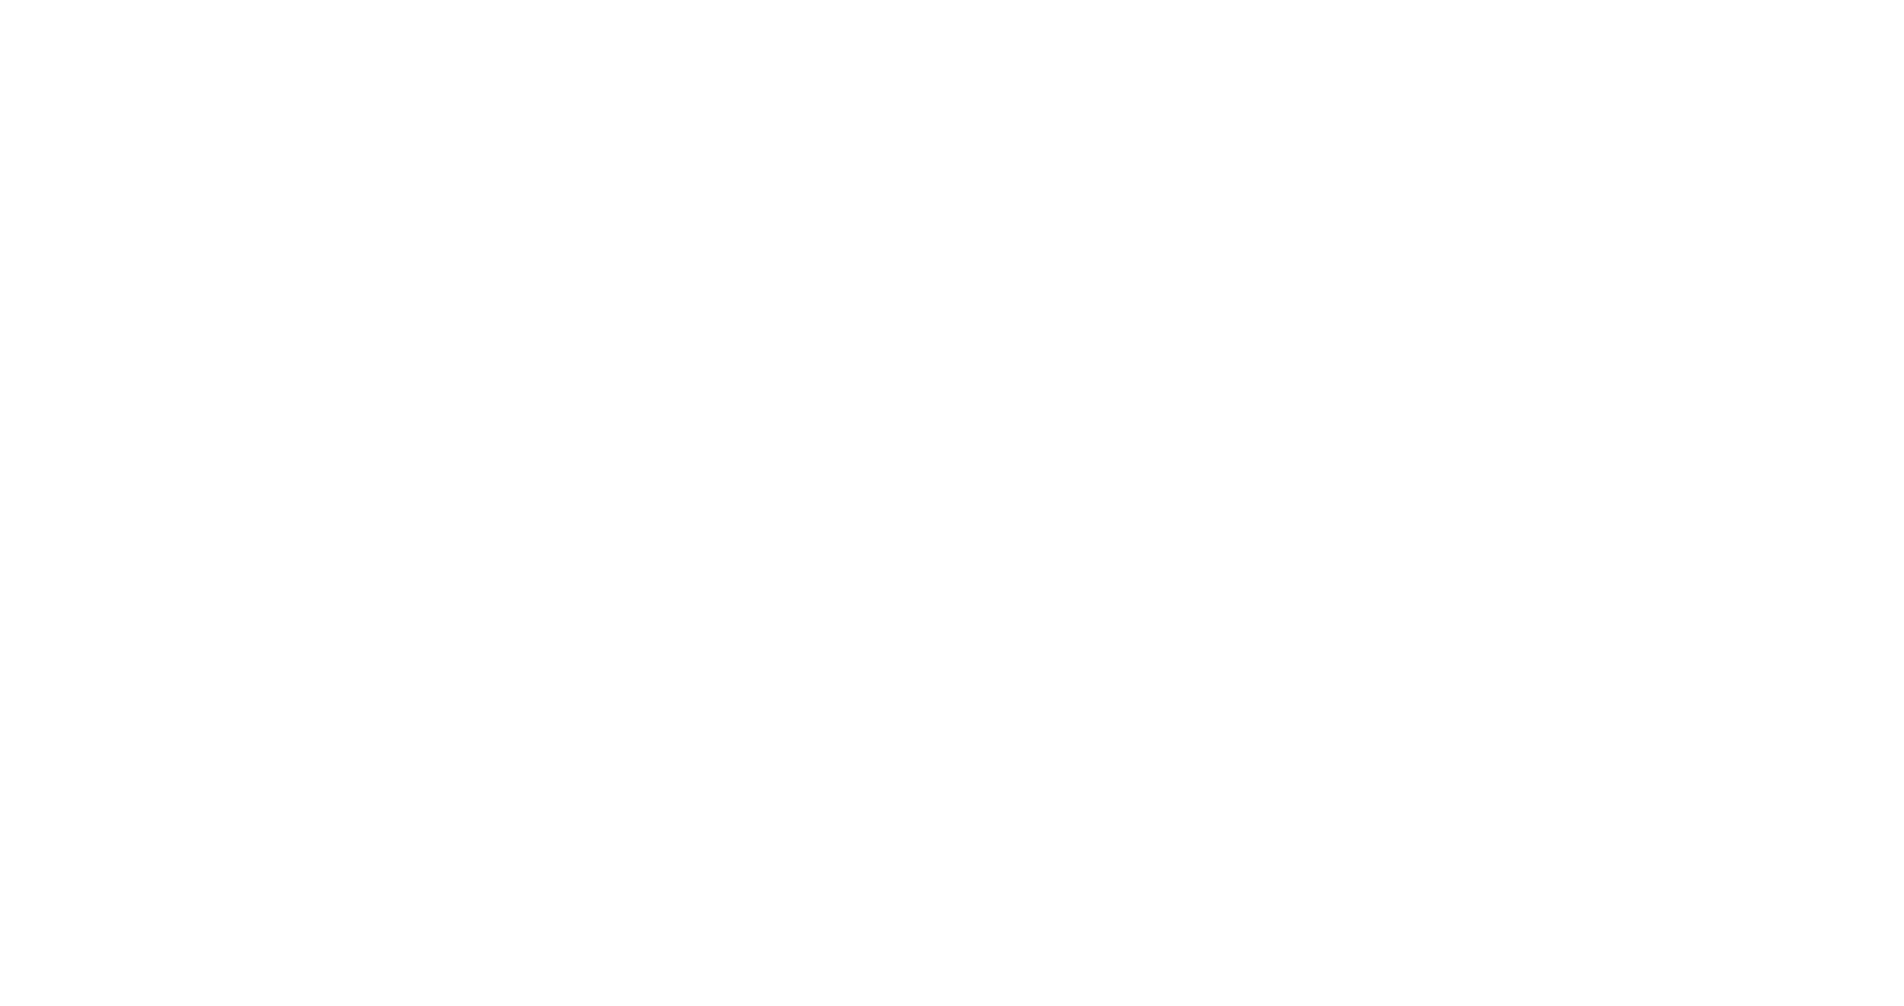 The Chamber logo